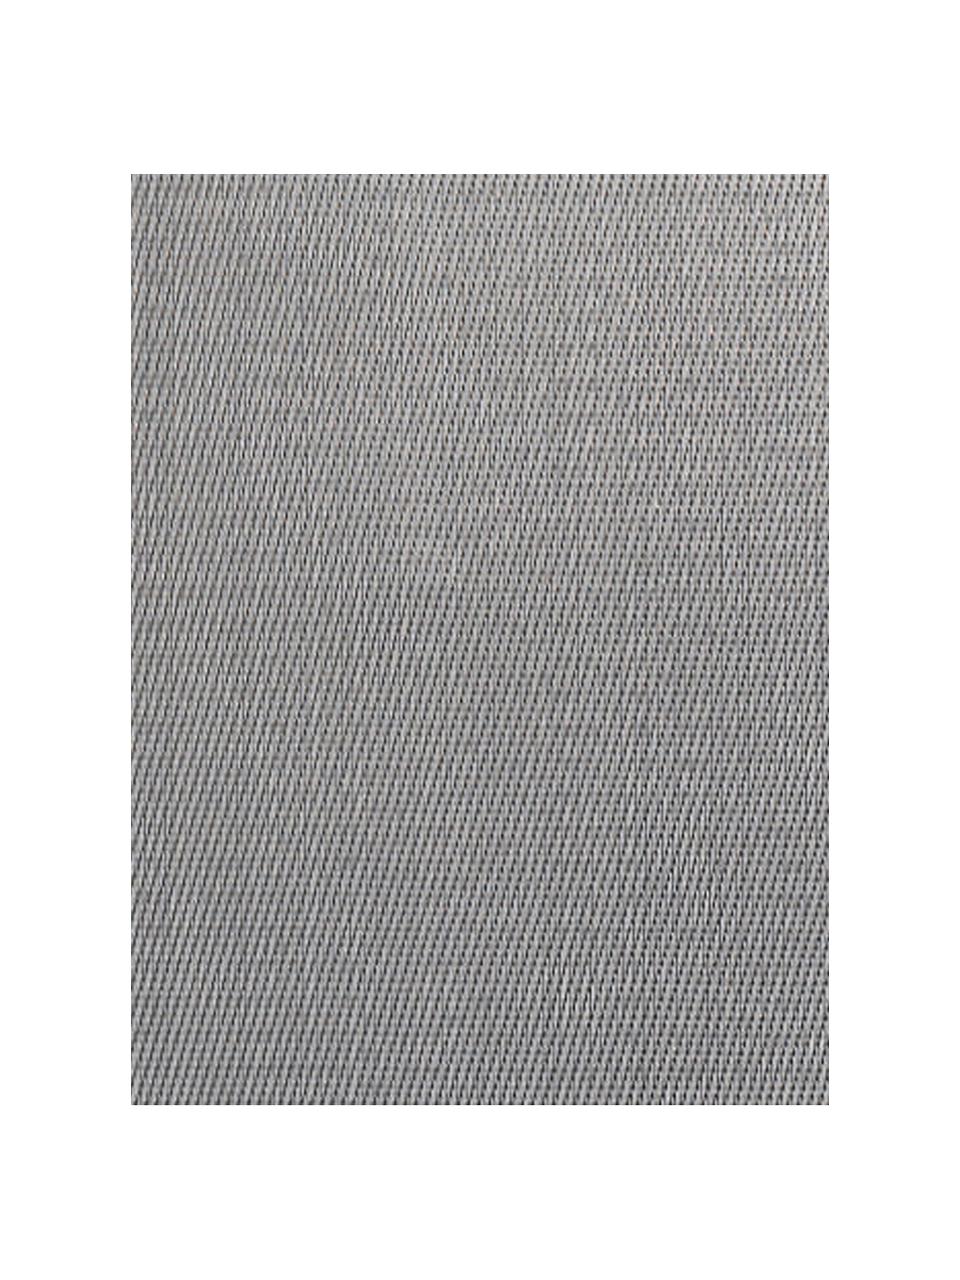 Kunststoff-Tischsets Trefl, 2 Stück, Kunststoff (PVC), Grautöne, B 33 x L 46 cm